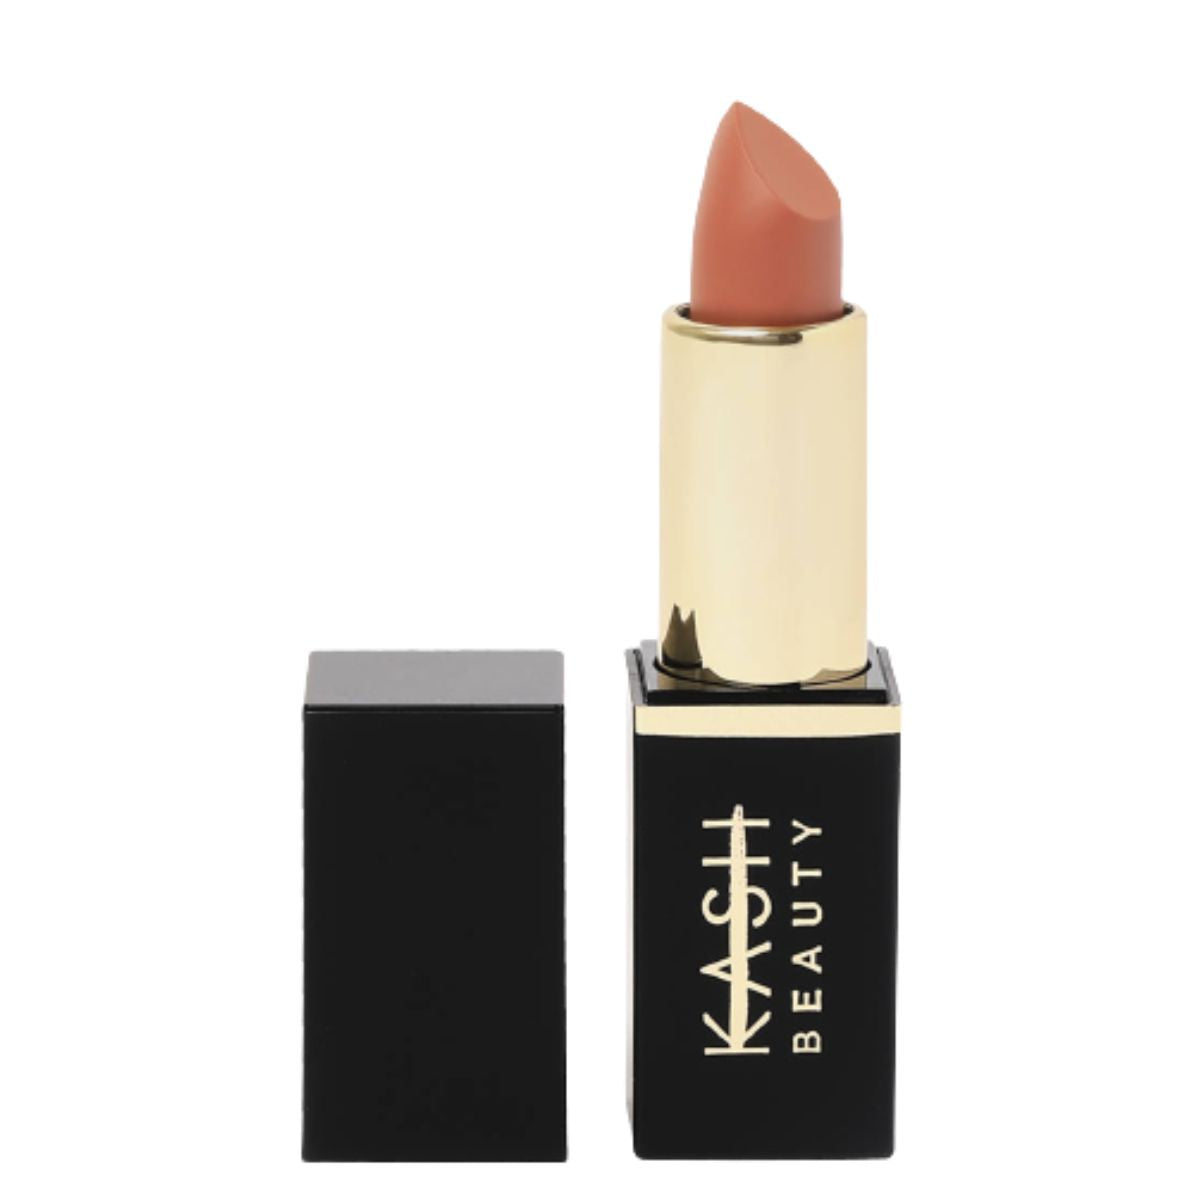 Kash Beauty Secret Treasure Lipstick